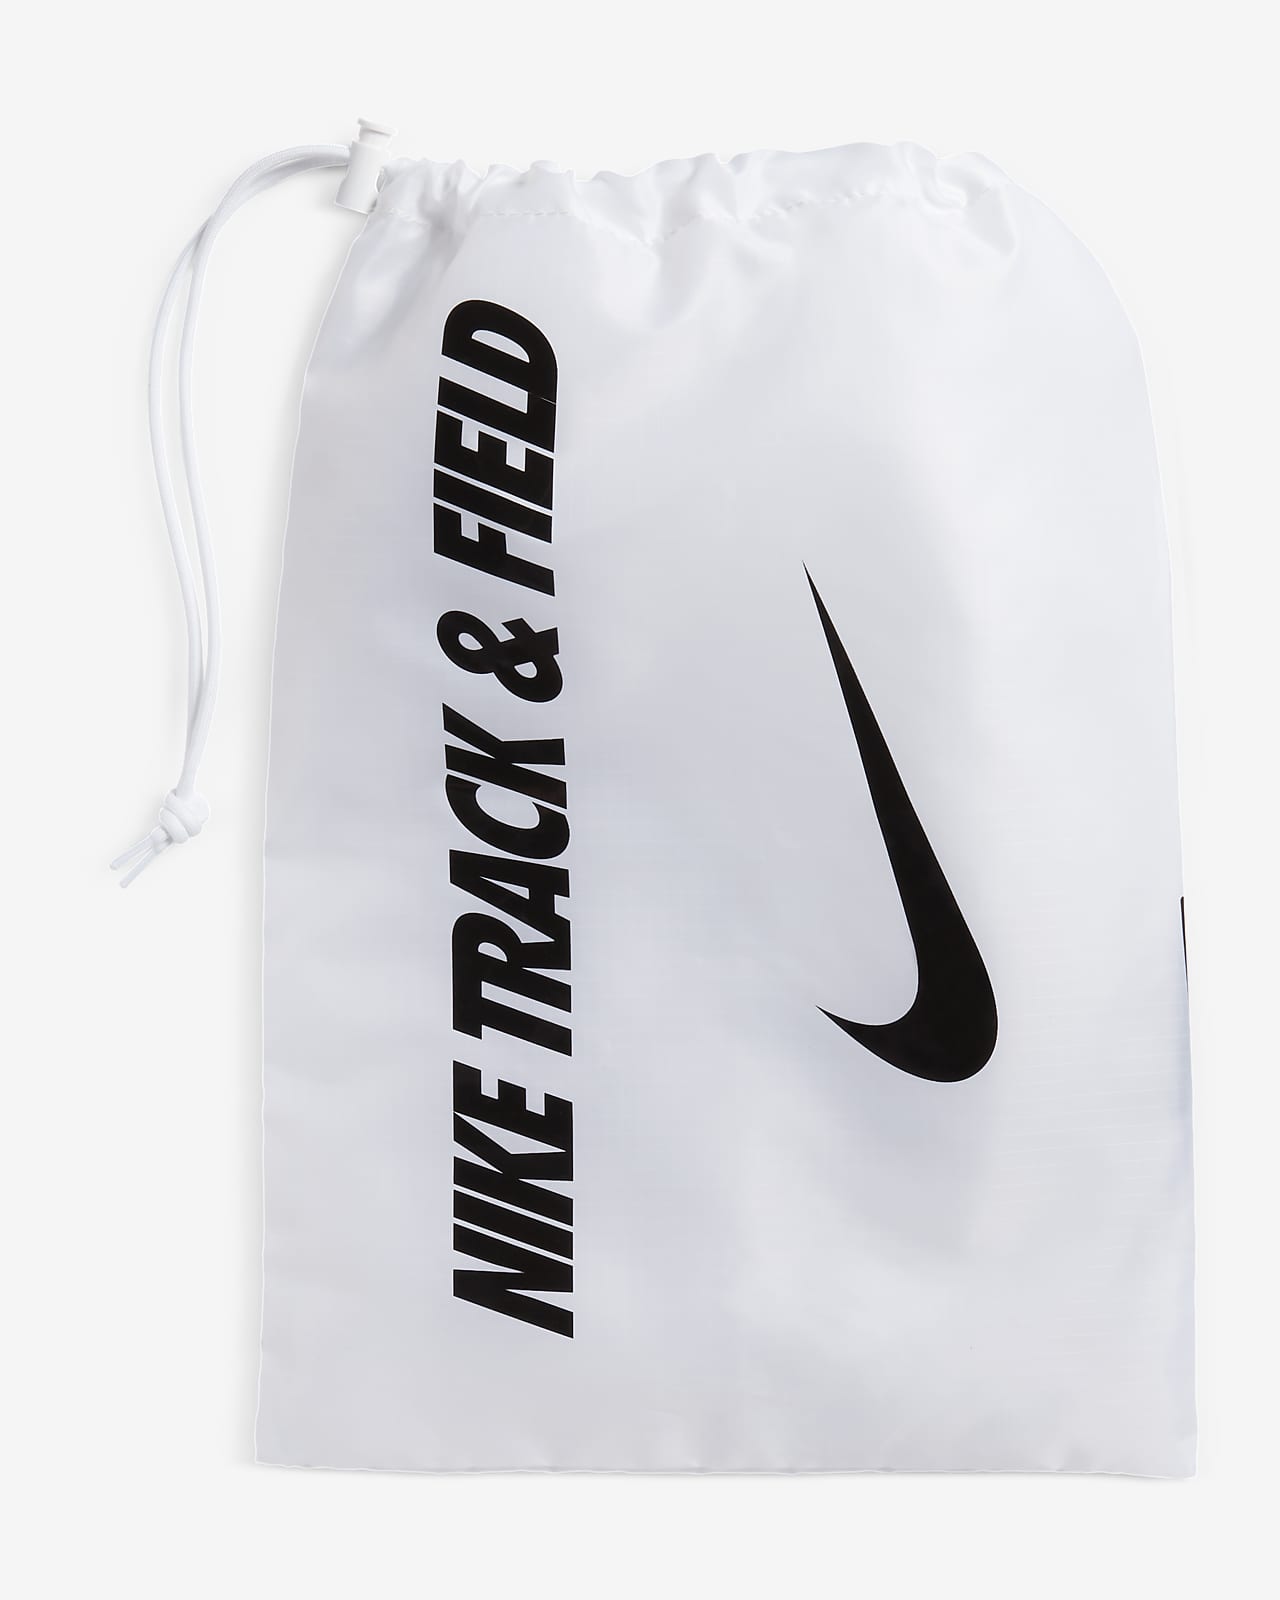 Nike track. Nike Dragonfly шиповки. Мешок track and field Nike. Тройной найк. Nike Racing мешок.